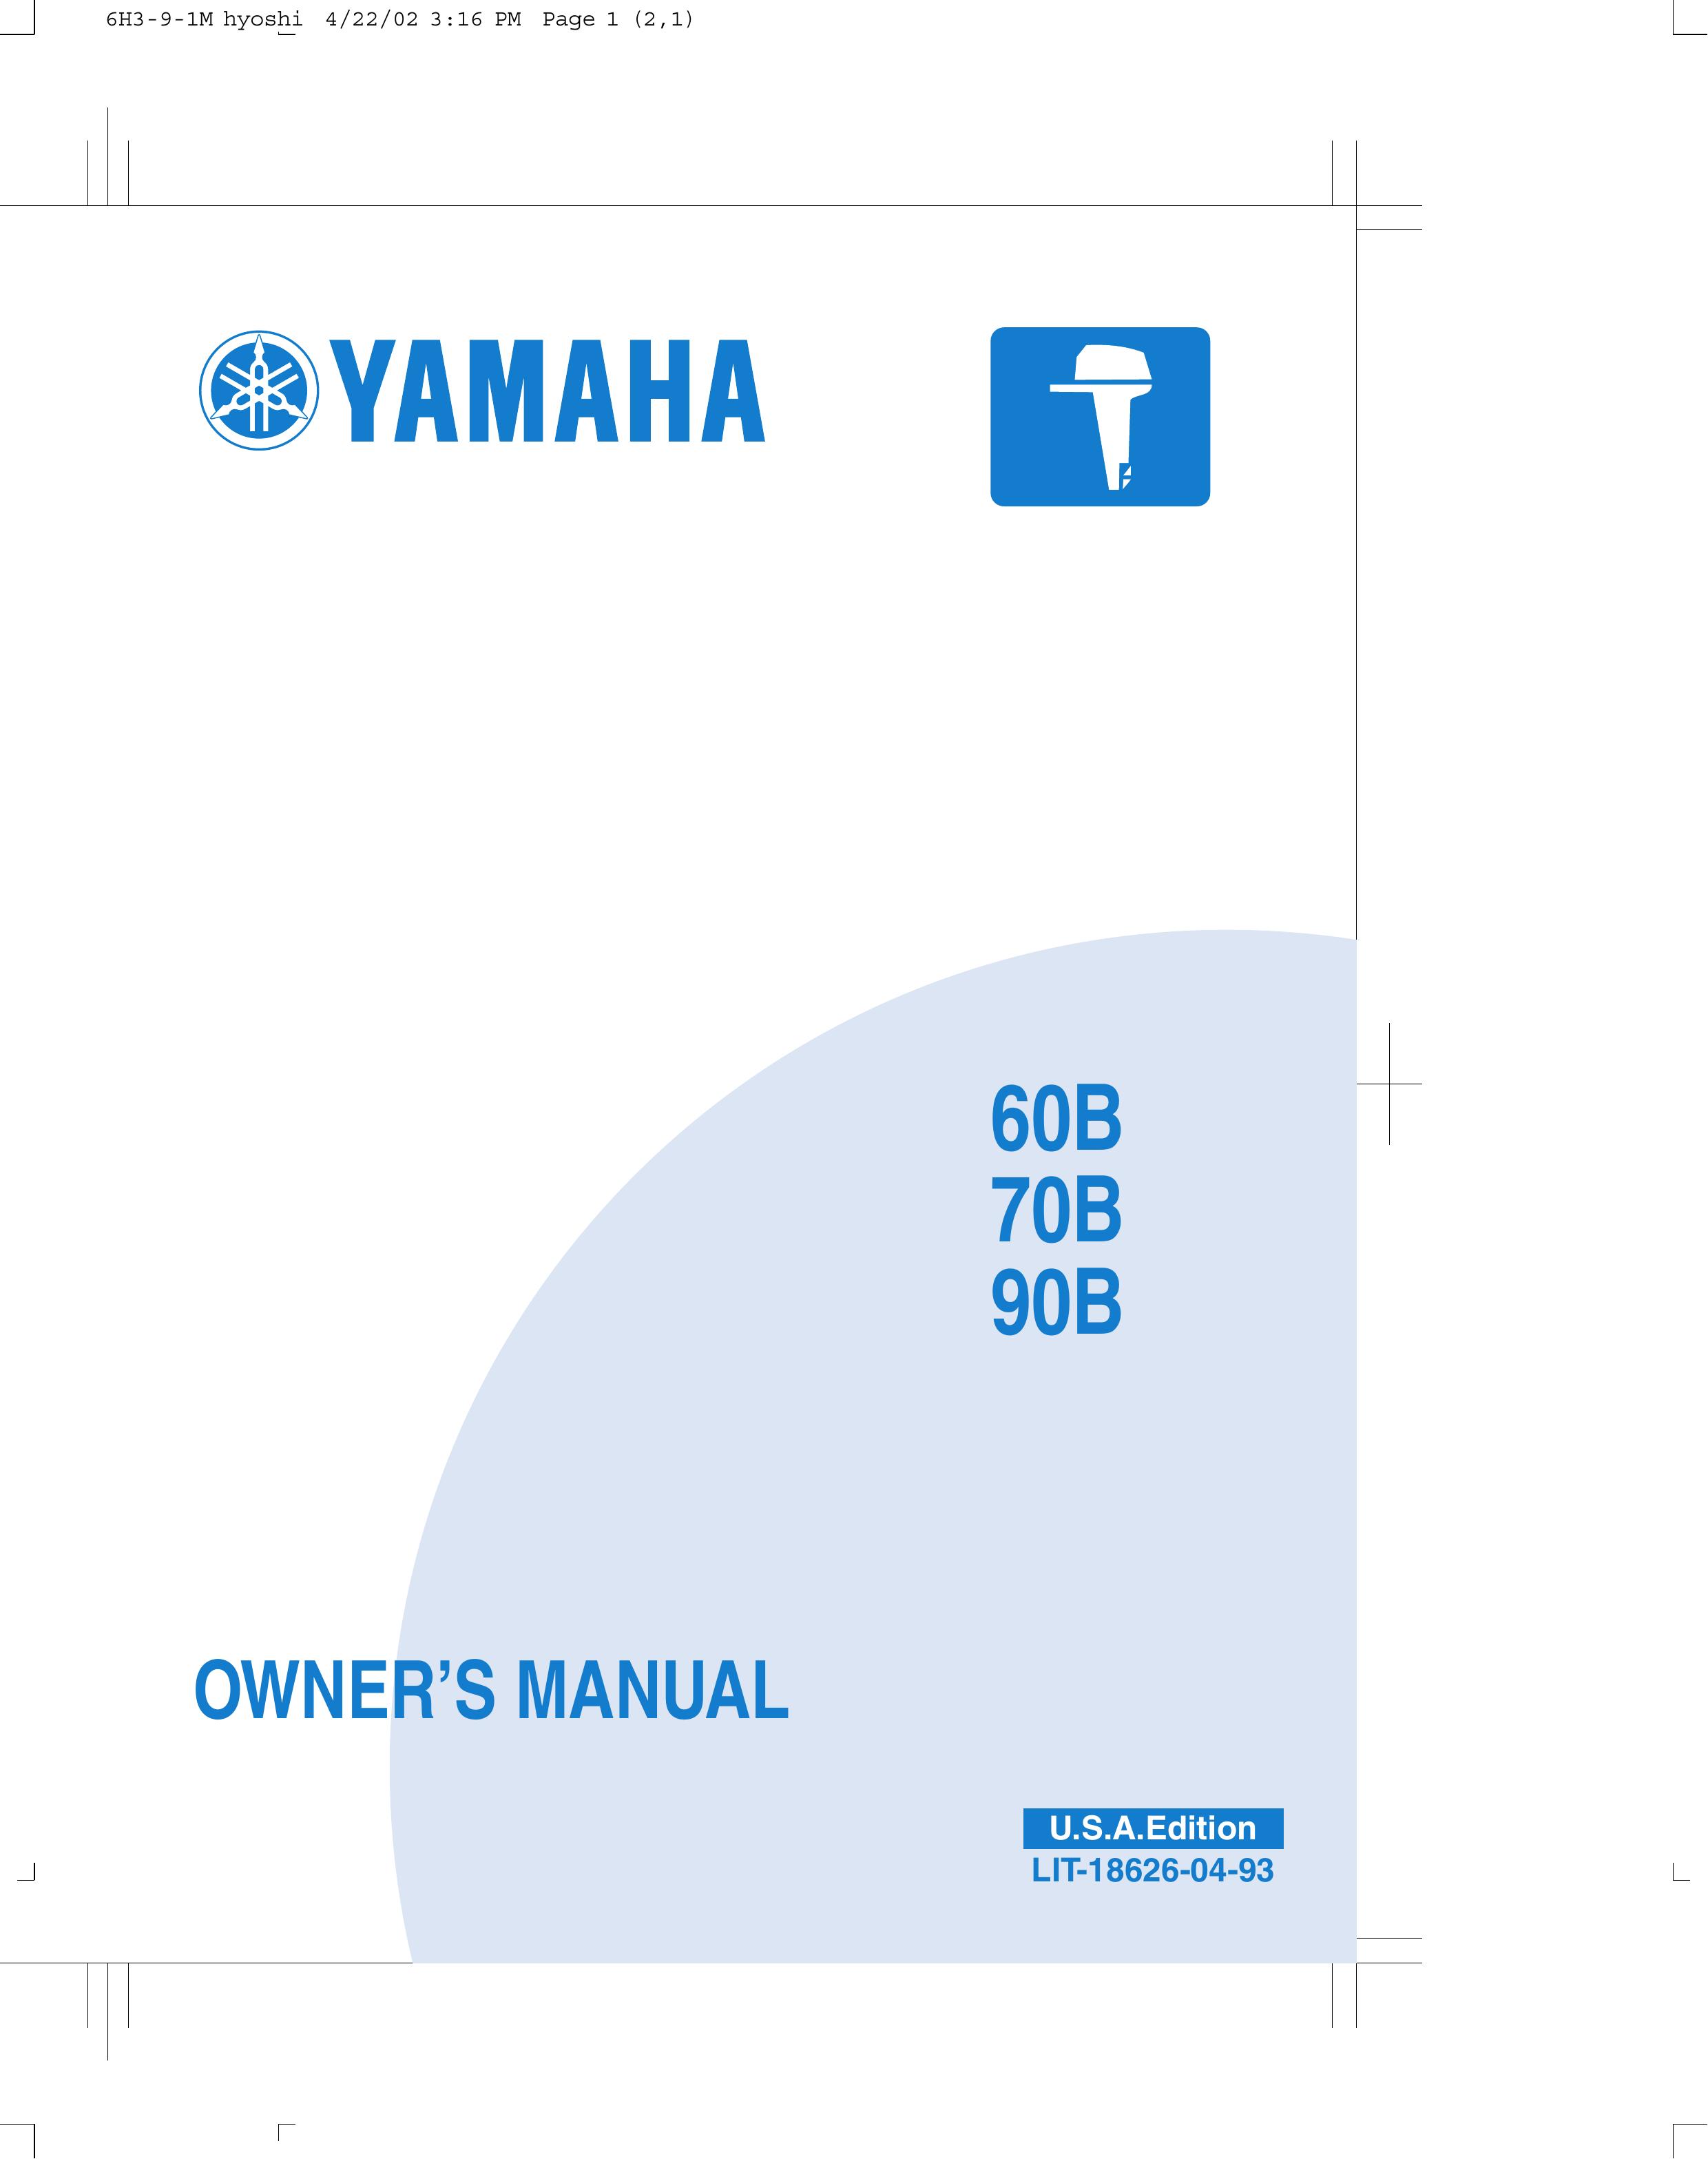 Yamaha 90B Outboard Motor User Manual